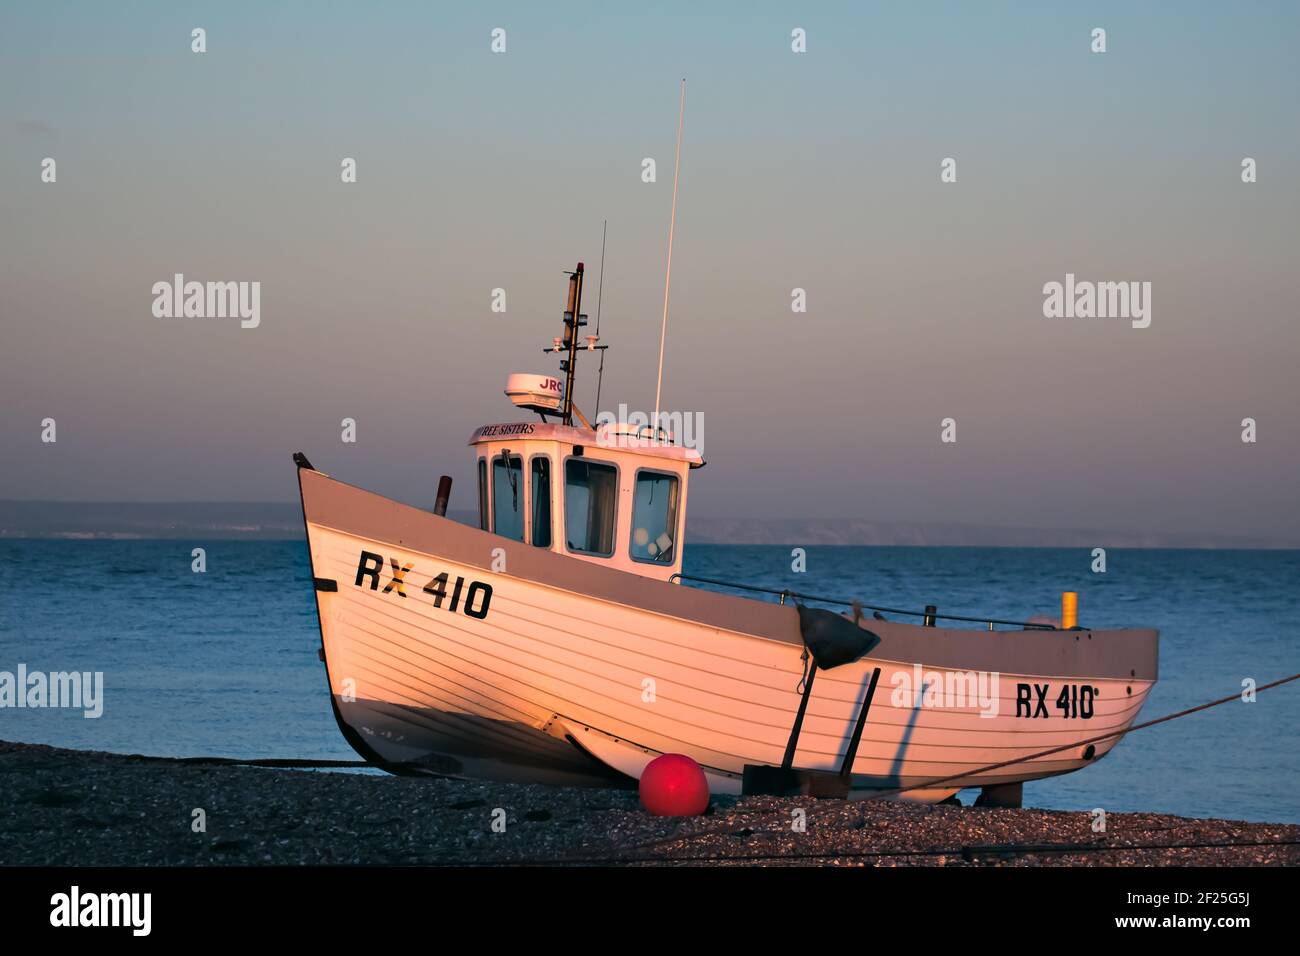 Fishing boat british radar hi-res stock photography and images - Alamy